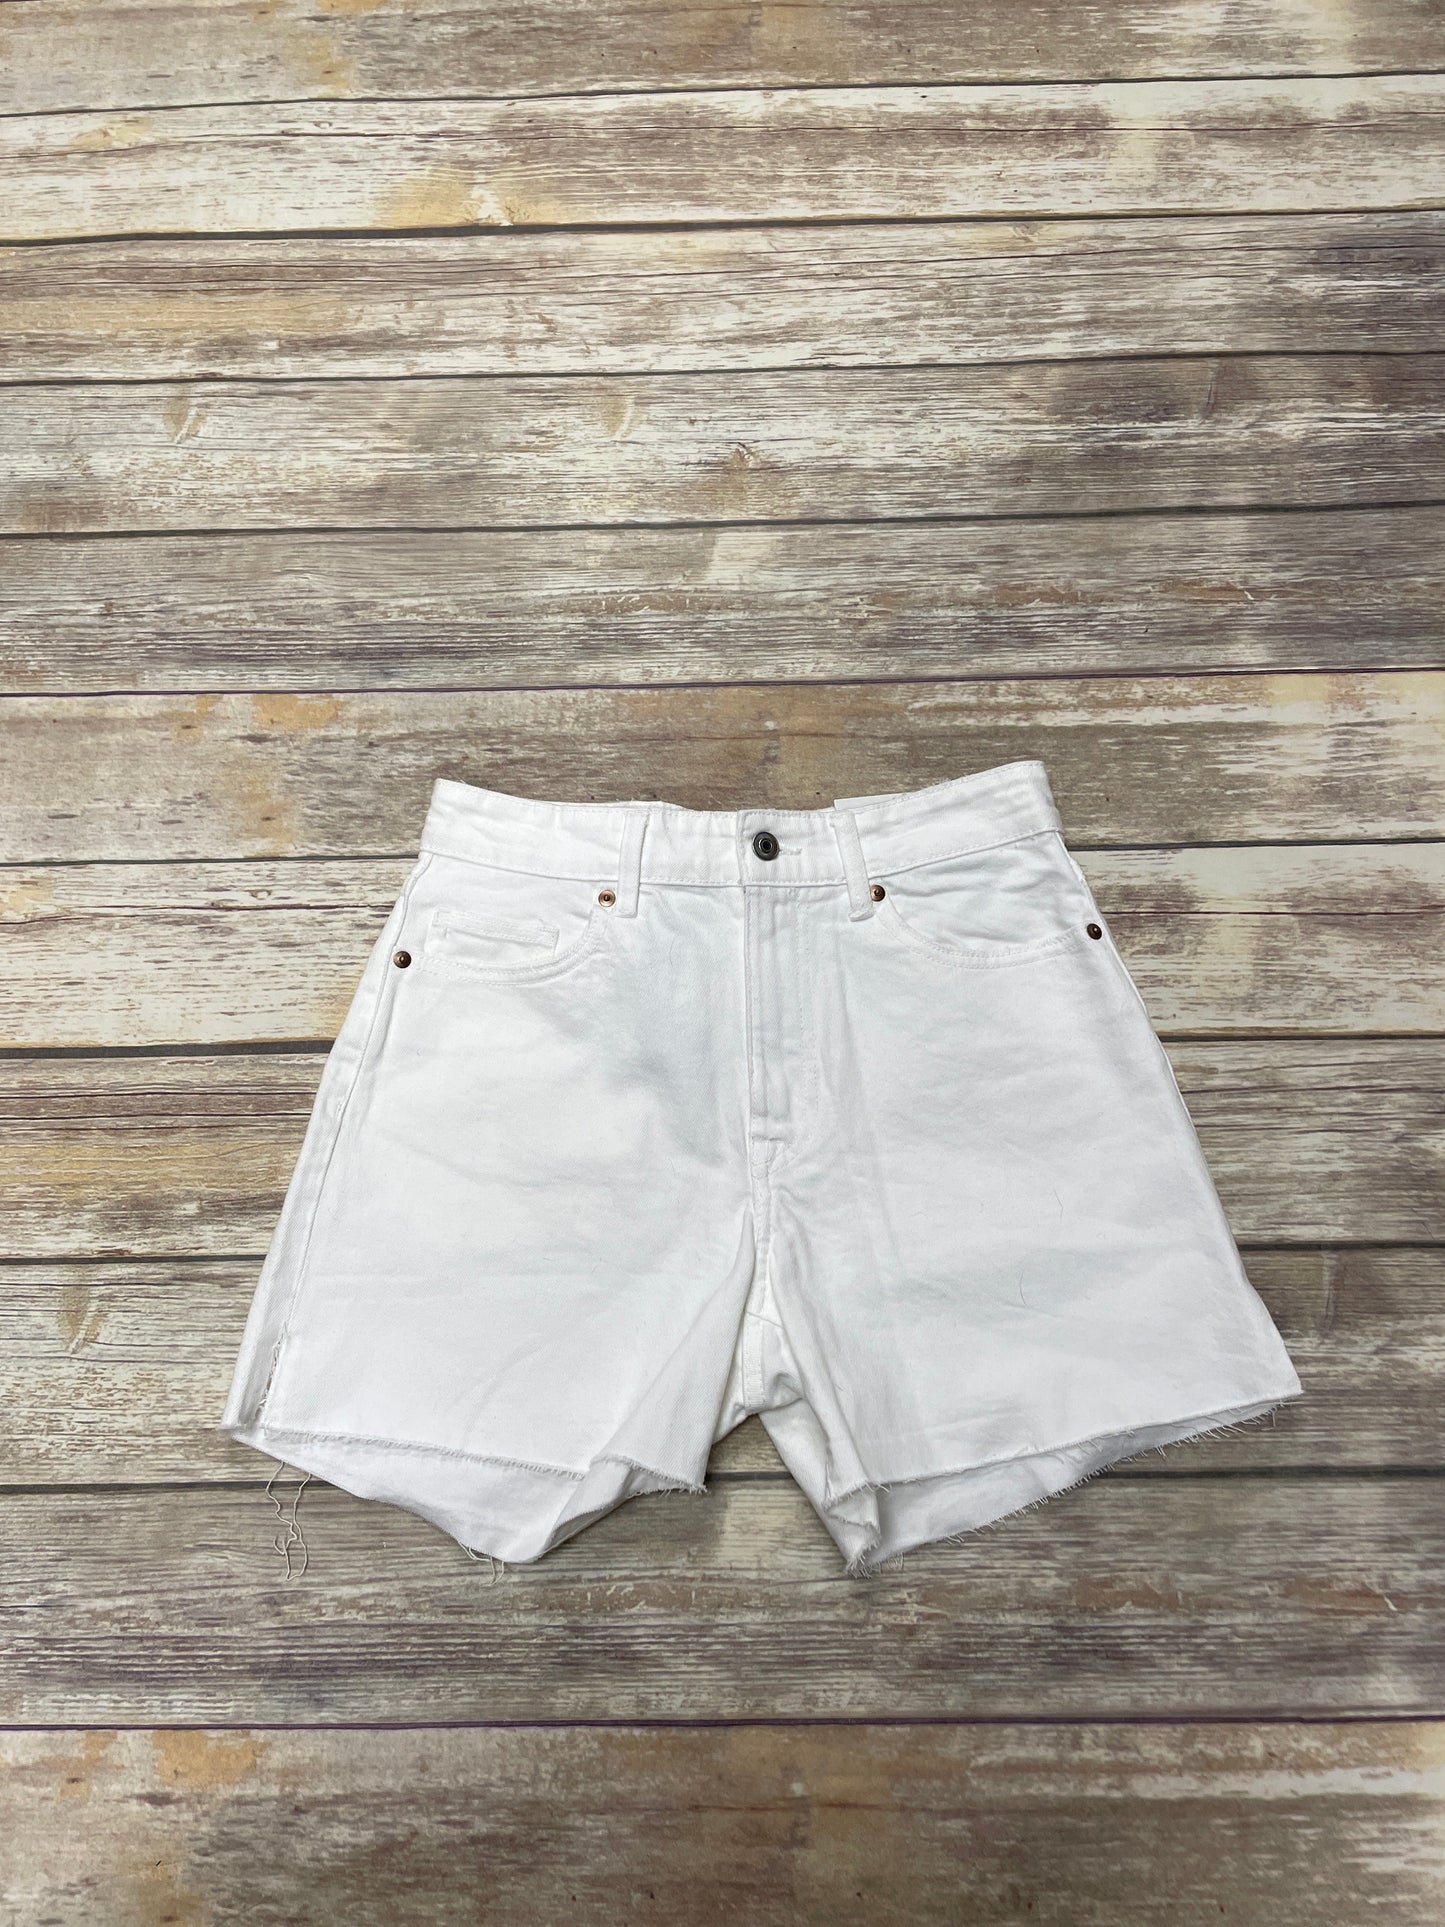 White Shorts H&m, Size 6